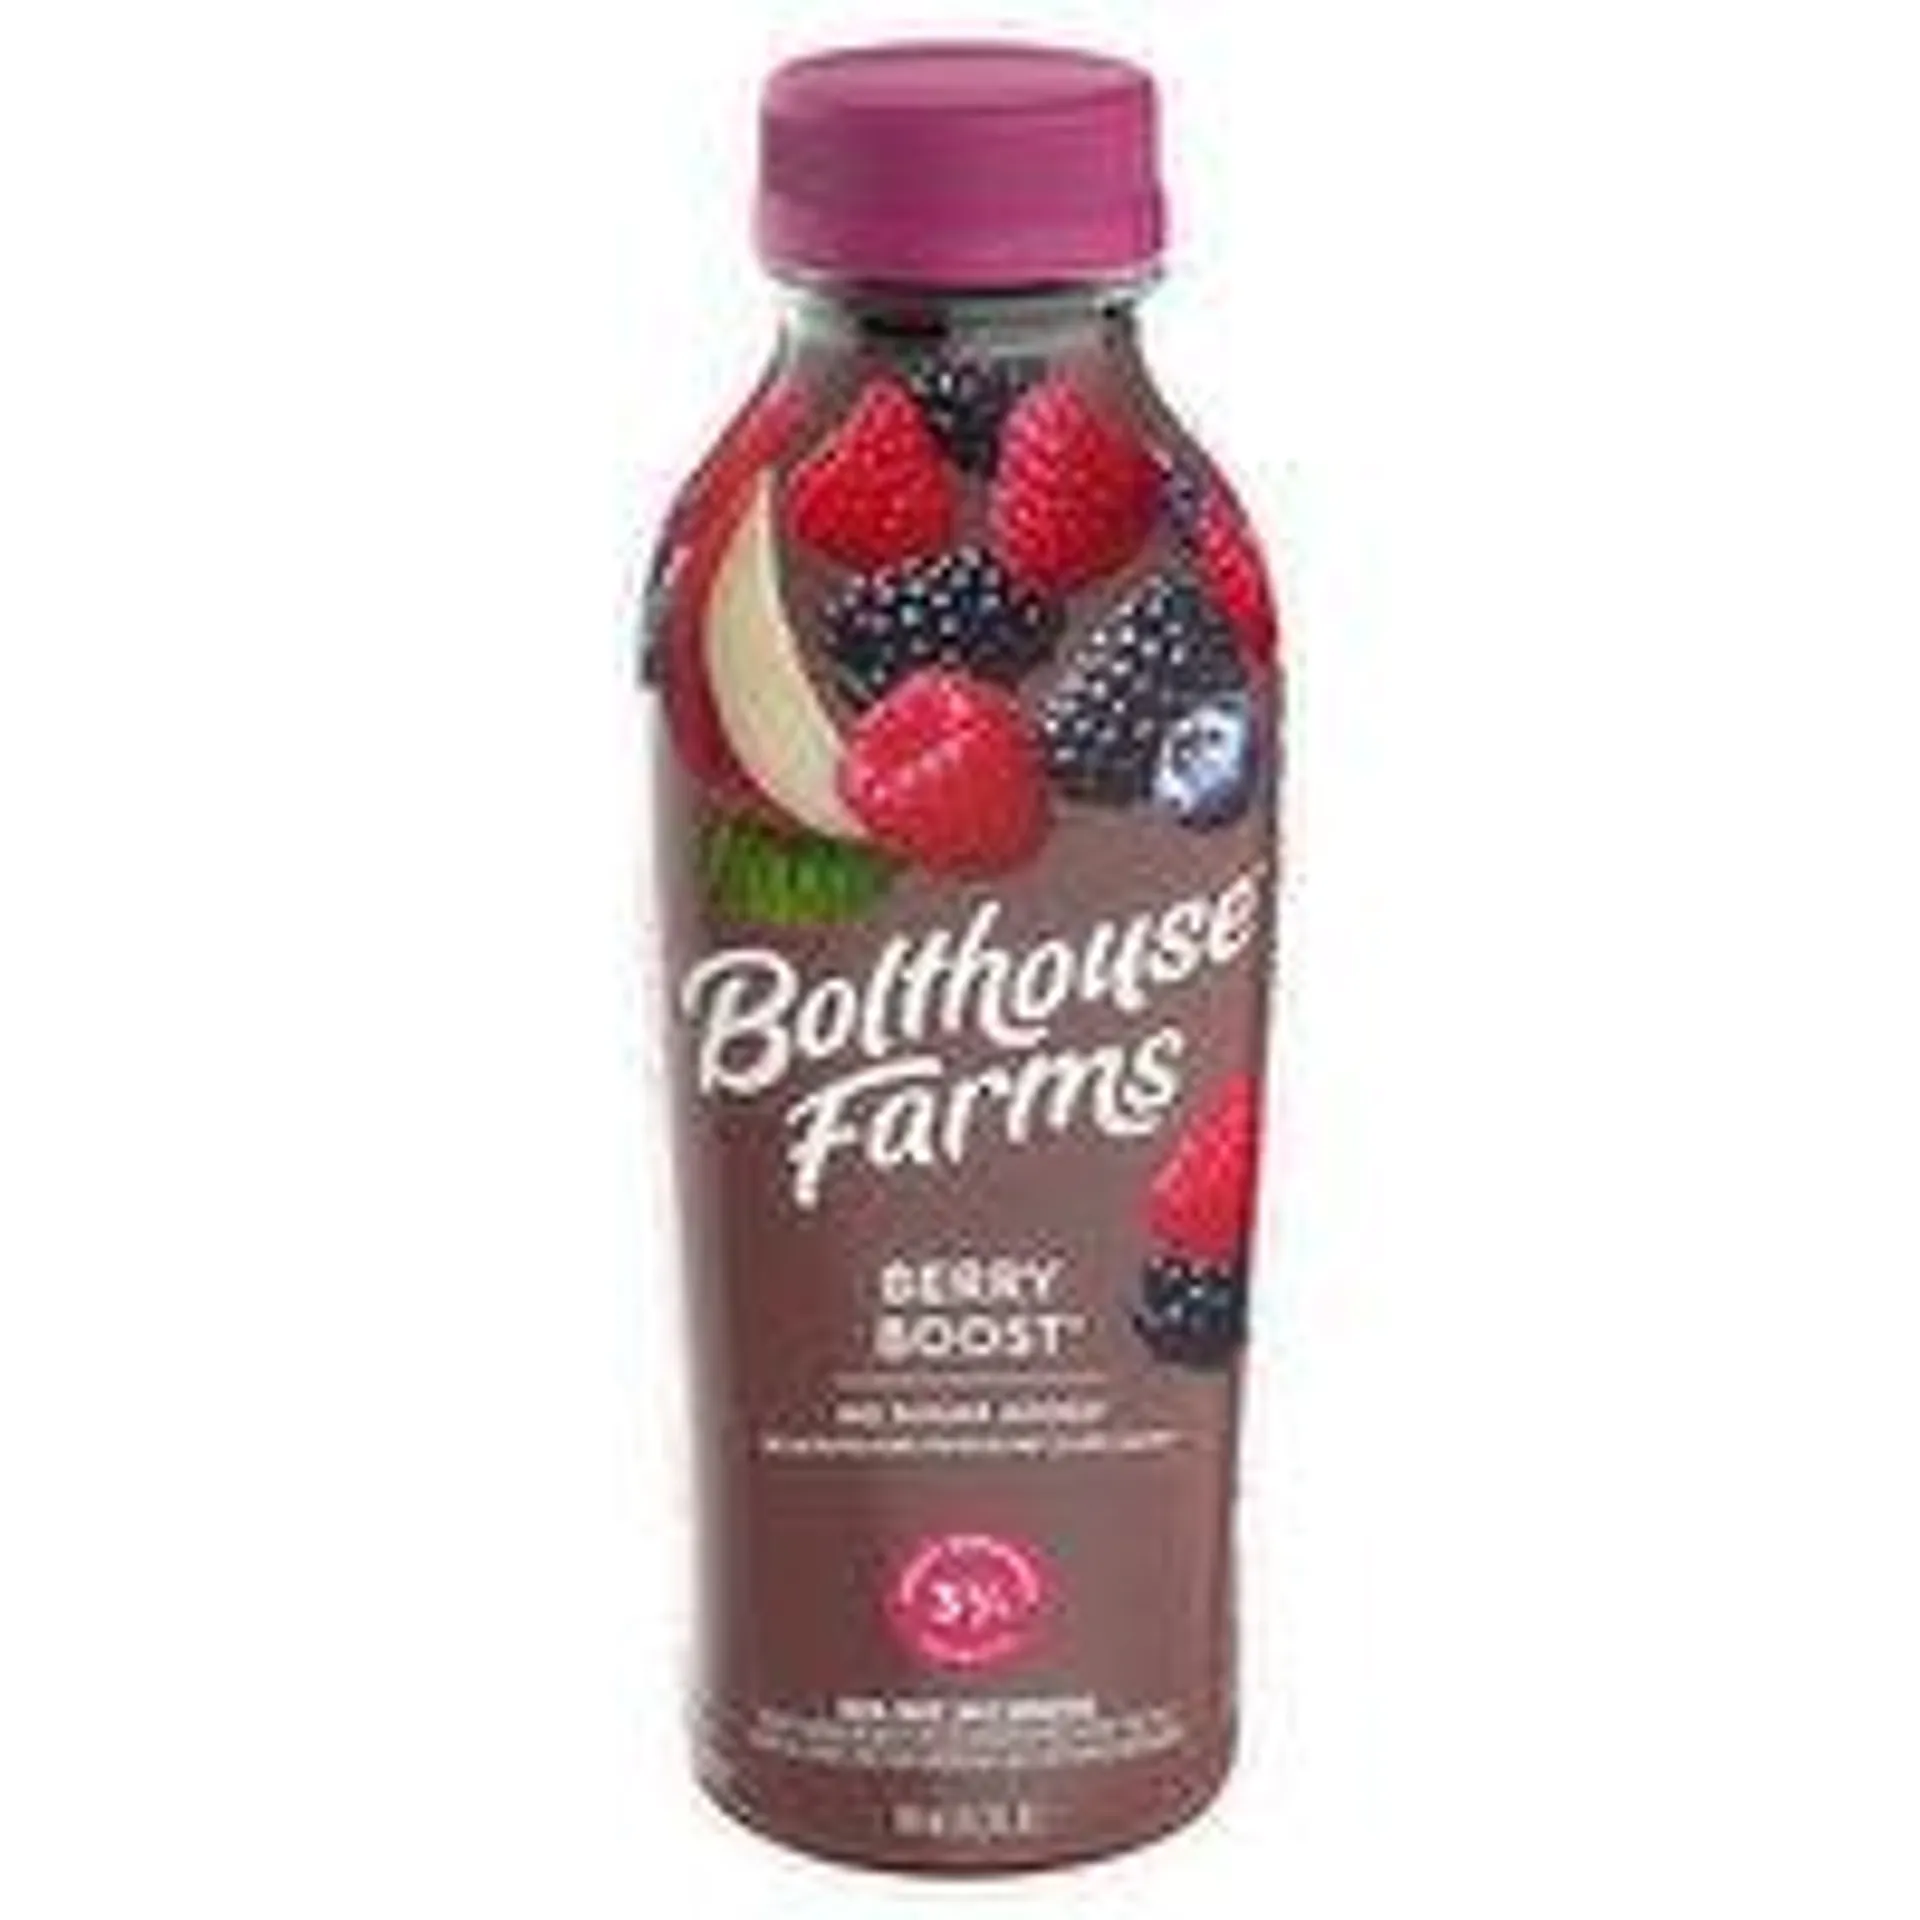 Bolthouse Farms 100% Fruit Juice Smoothie, Berry Boost - 15.2 Fluid ounce